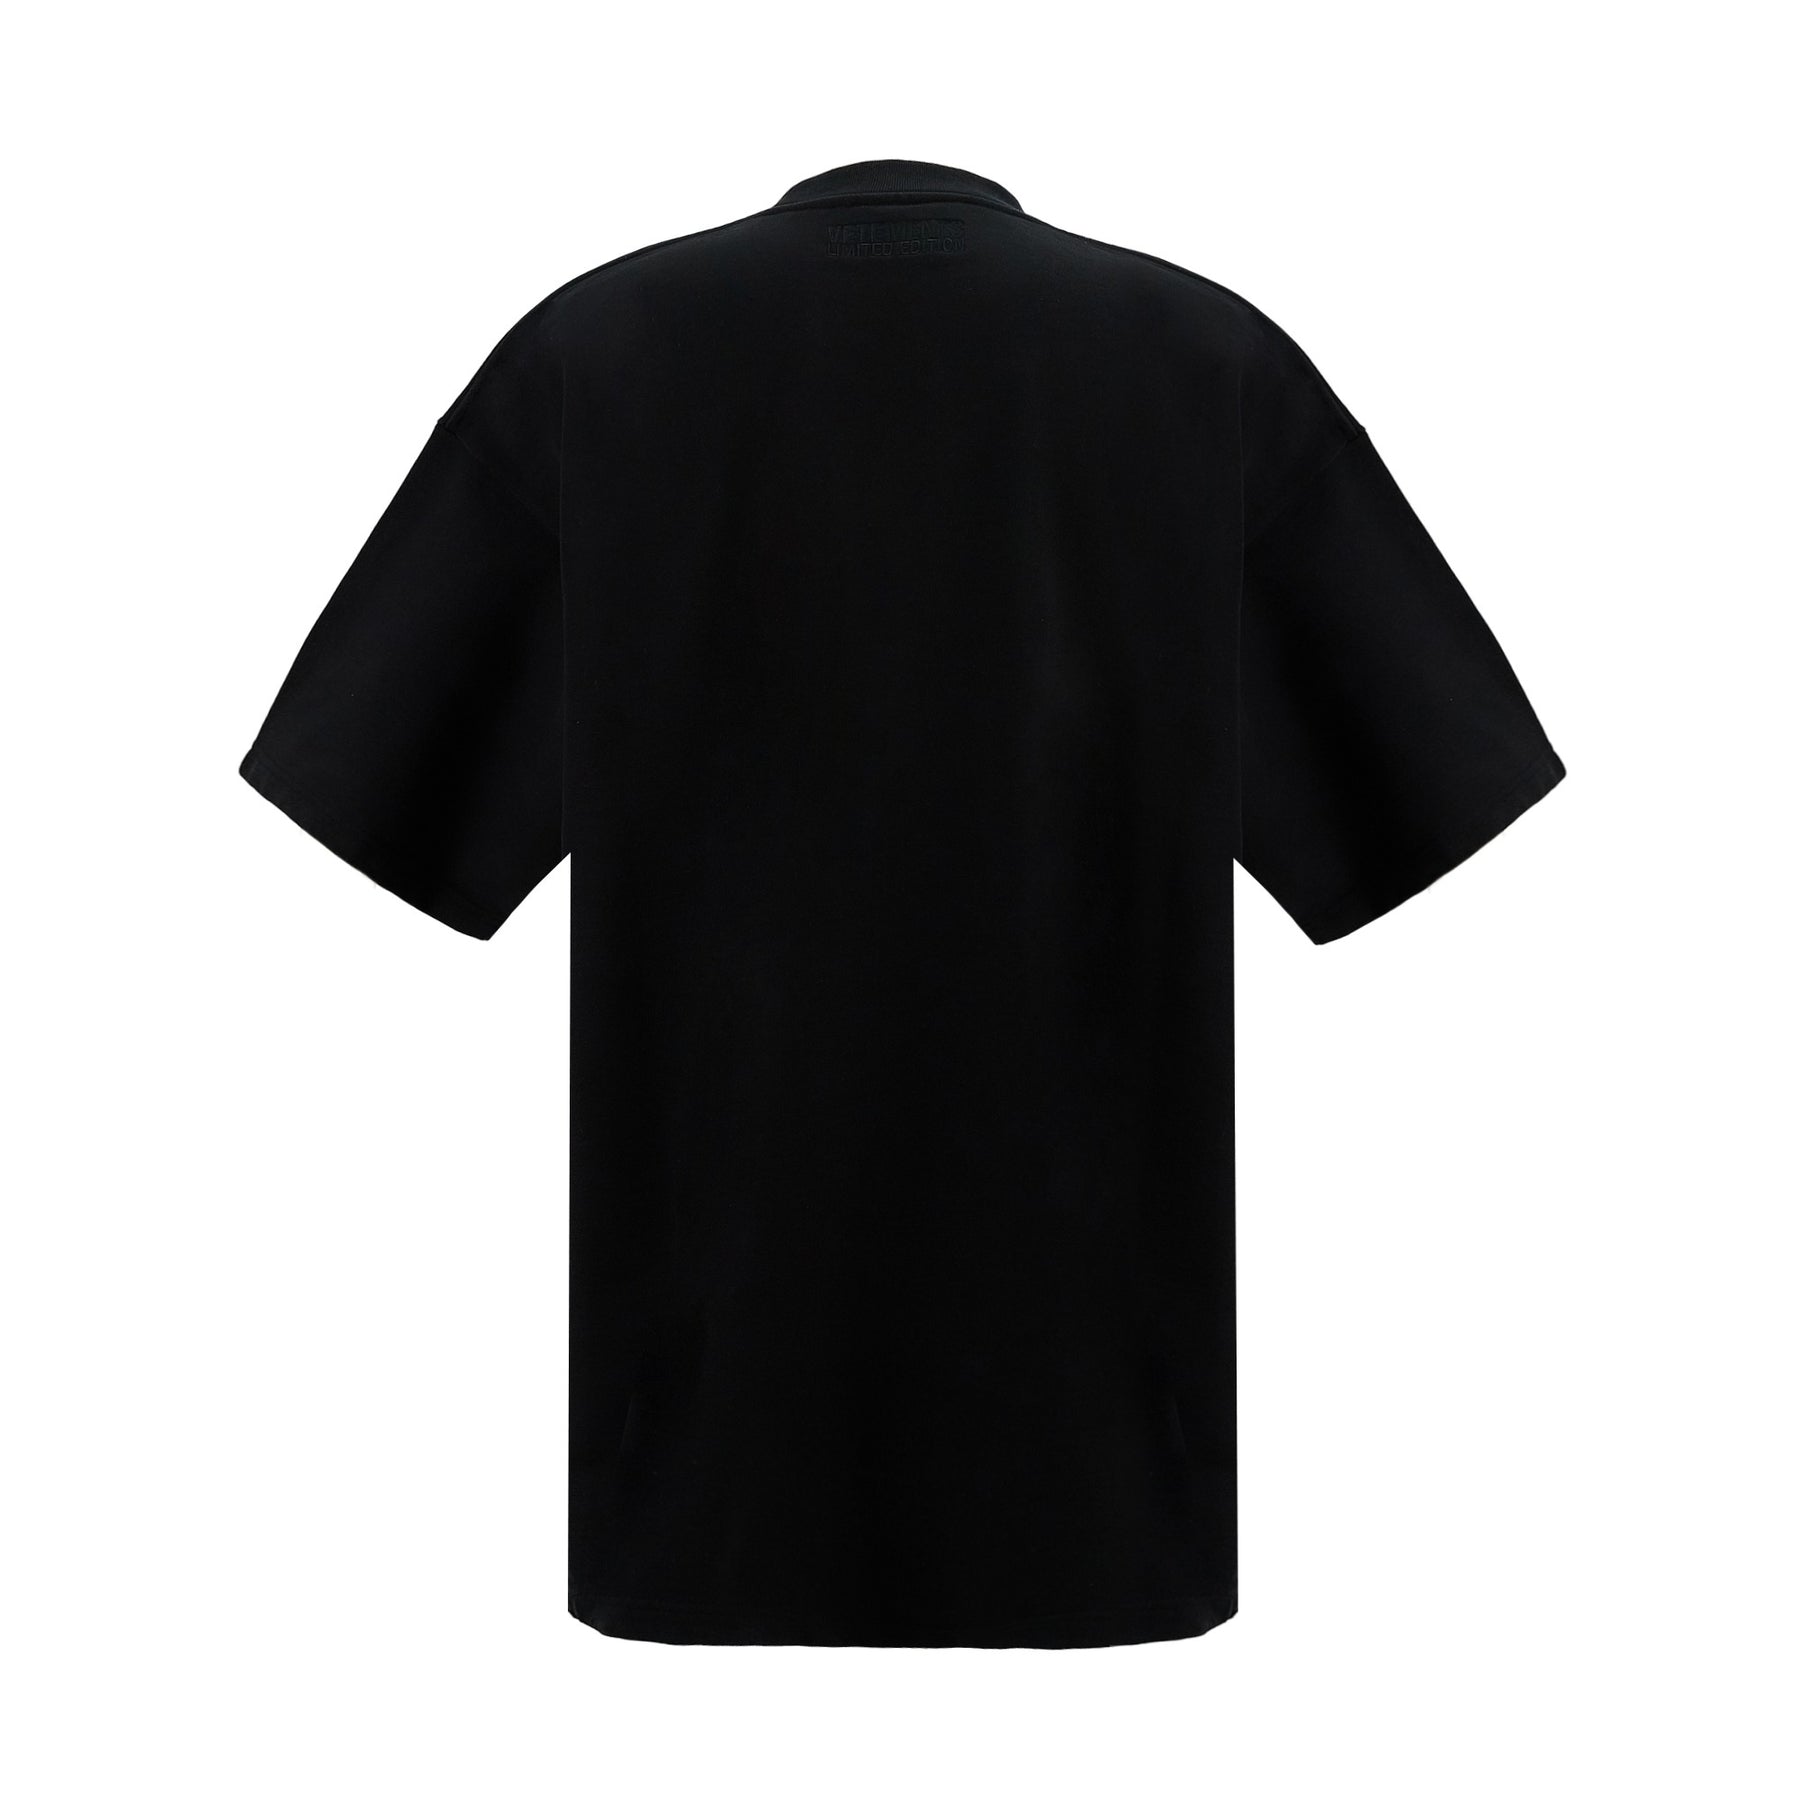 Java Embroidered T-shirt (Black) – CLUB 21 THAILAND CO., LTD.